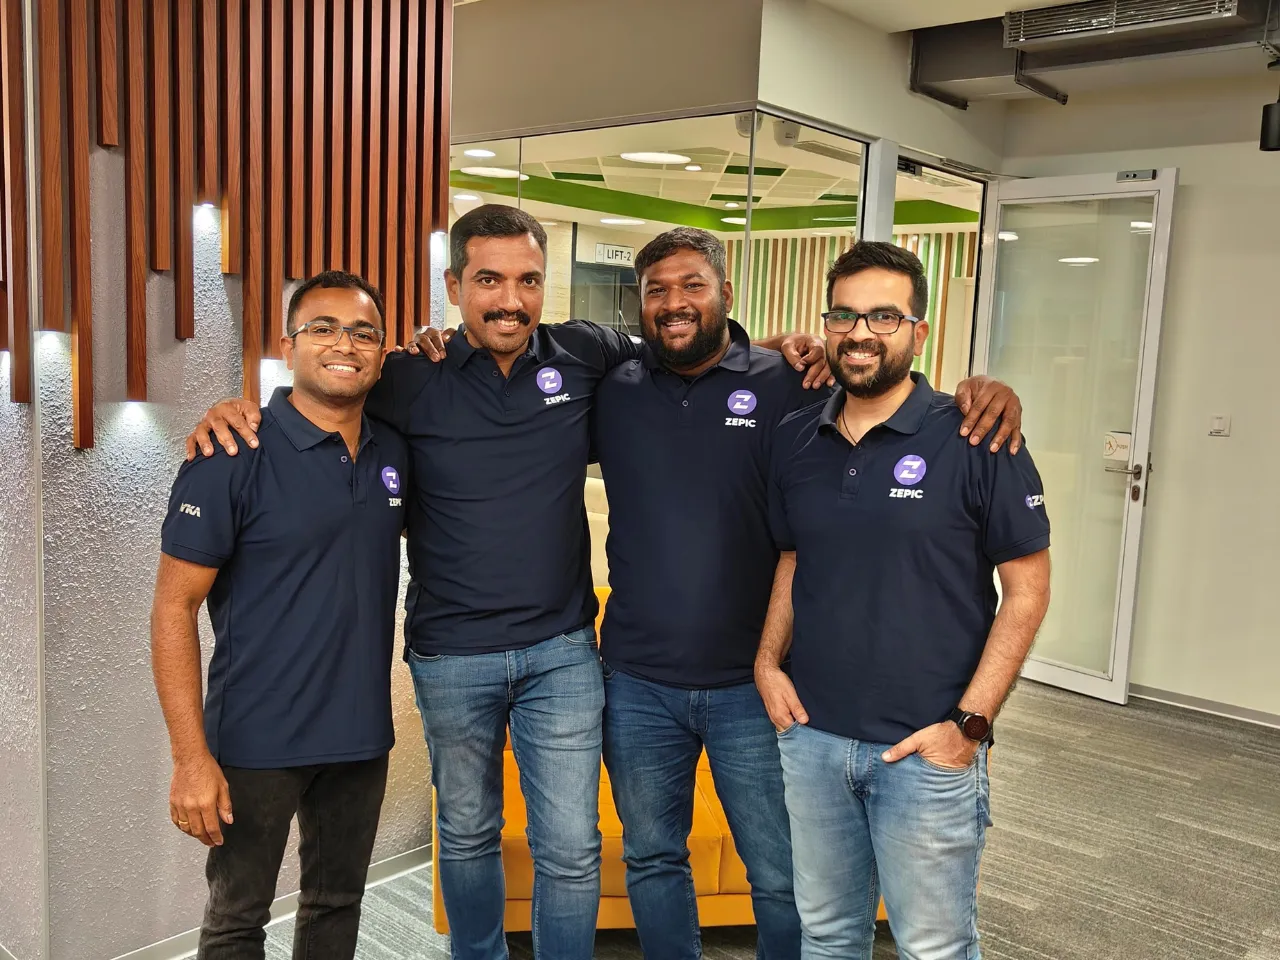 ZEPIC Co-founders Naveen Venkatesan, Bharathi Kannan Ravikumar, Sunil Kumar and Sreelesh Pillai